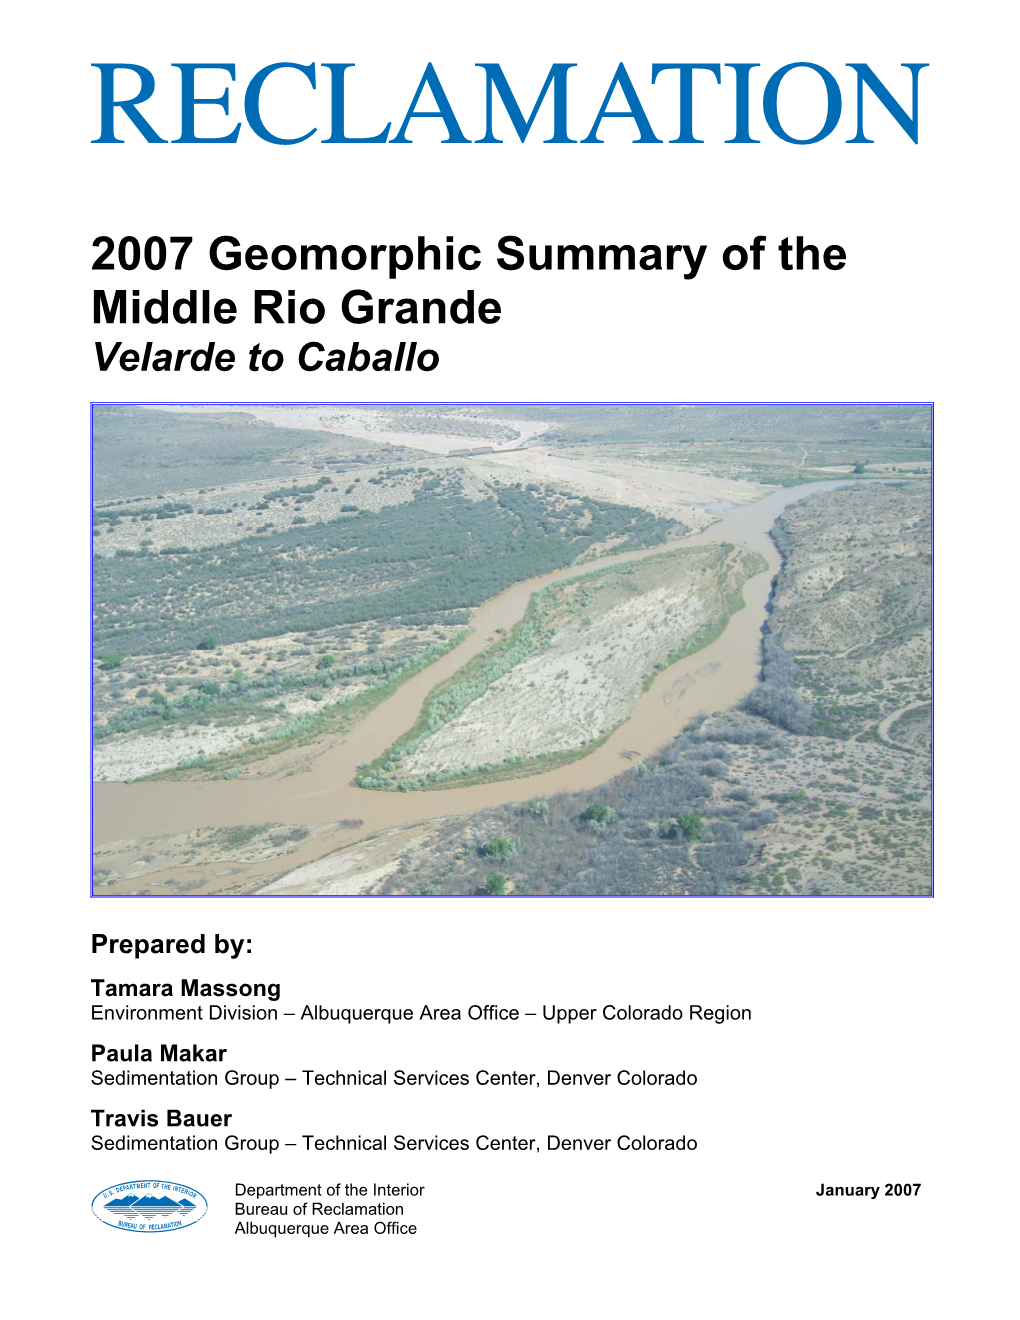 2007 Geomorphic Summary of the Middle Rio Grande Velarde to Caballo